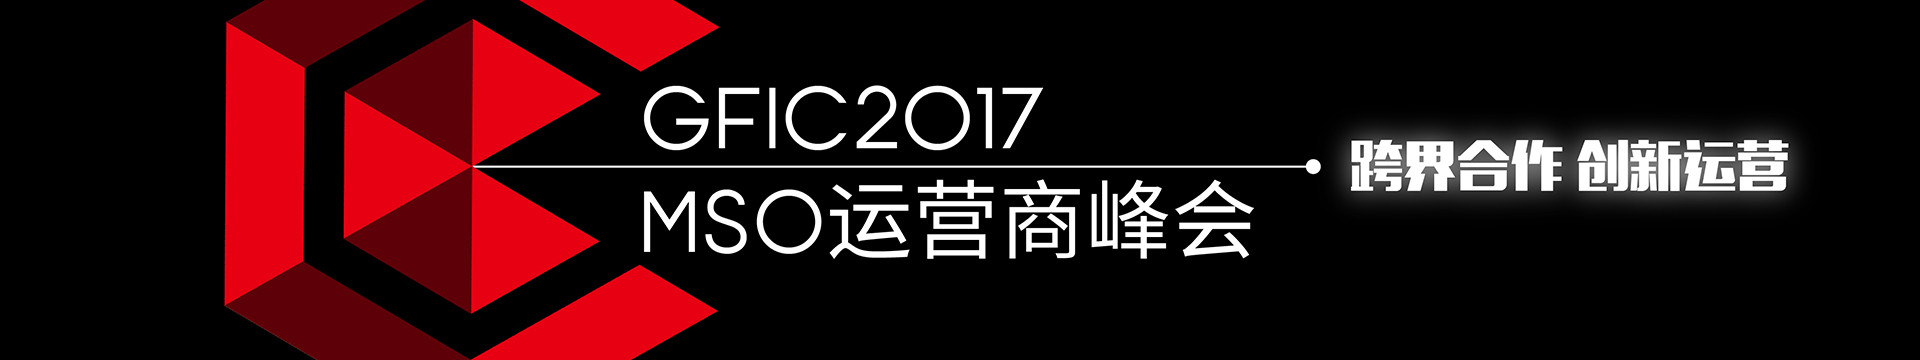 GFIC 2017-全球MSO运营商峰会